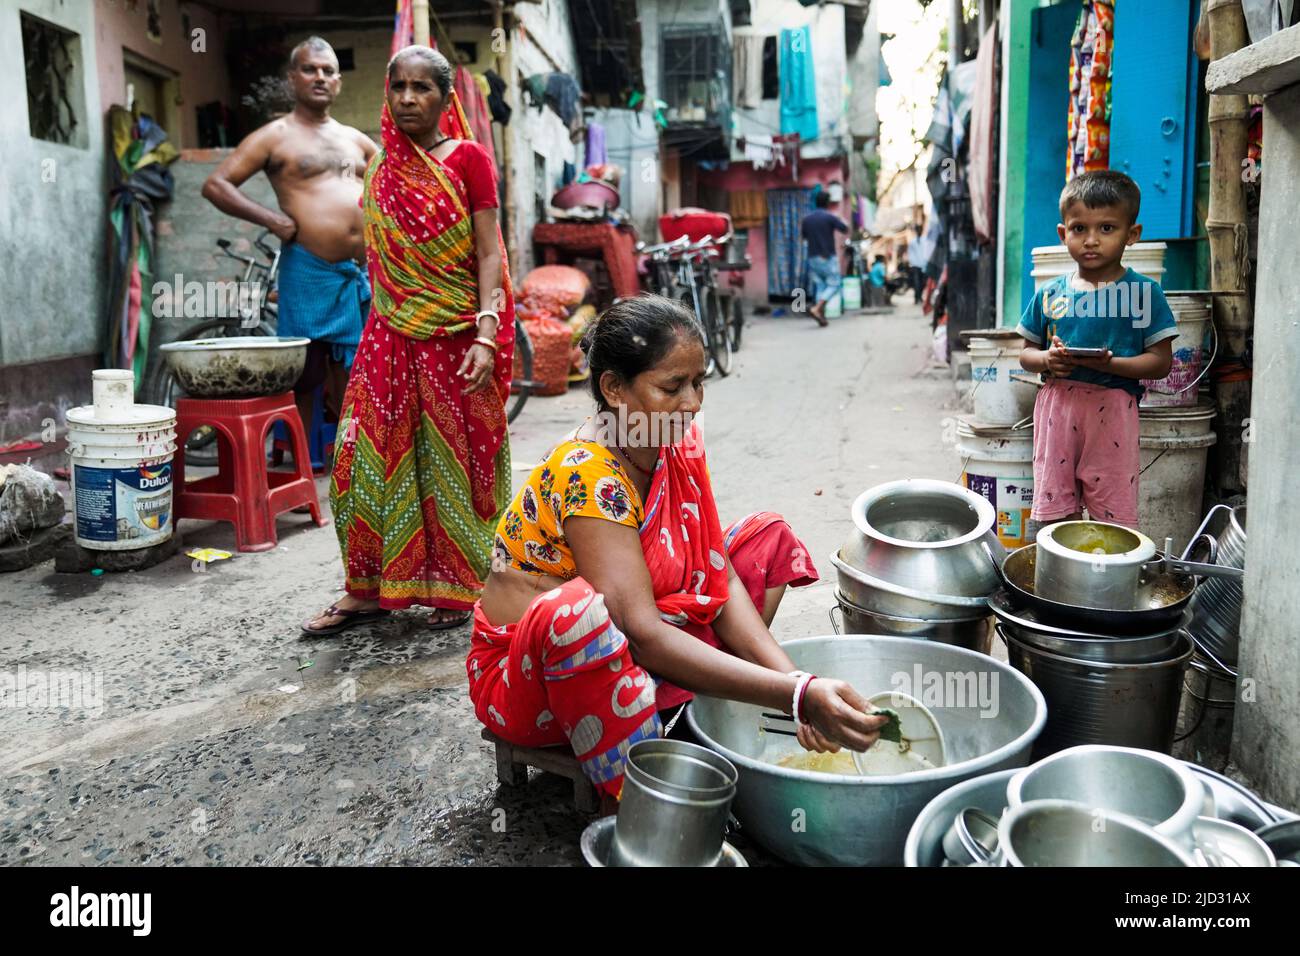 Scenes from a shantytown, slum in Calcutta, Bengal, India Stock Photo